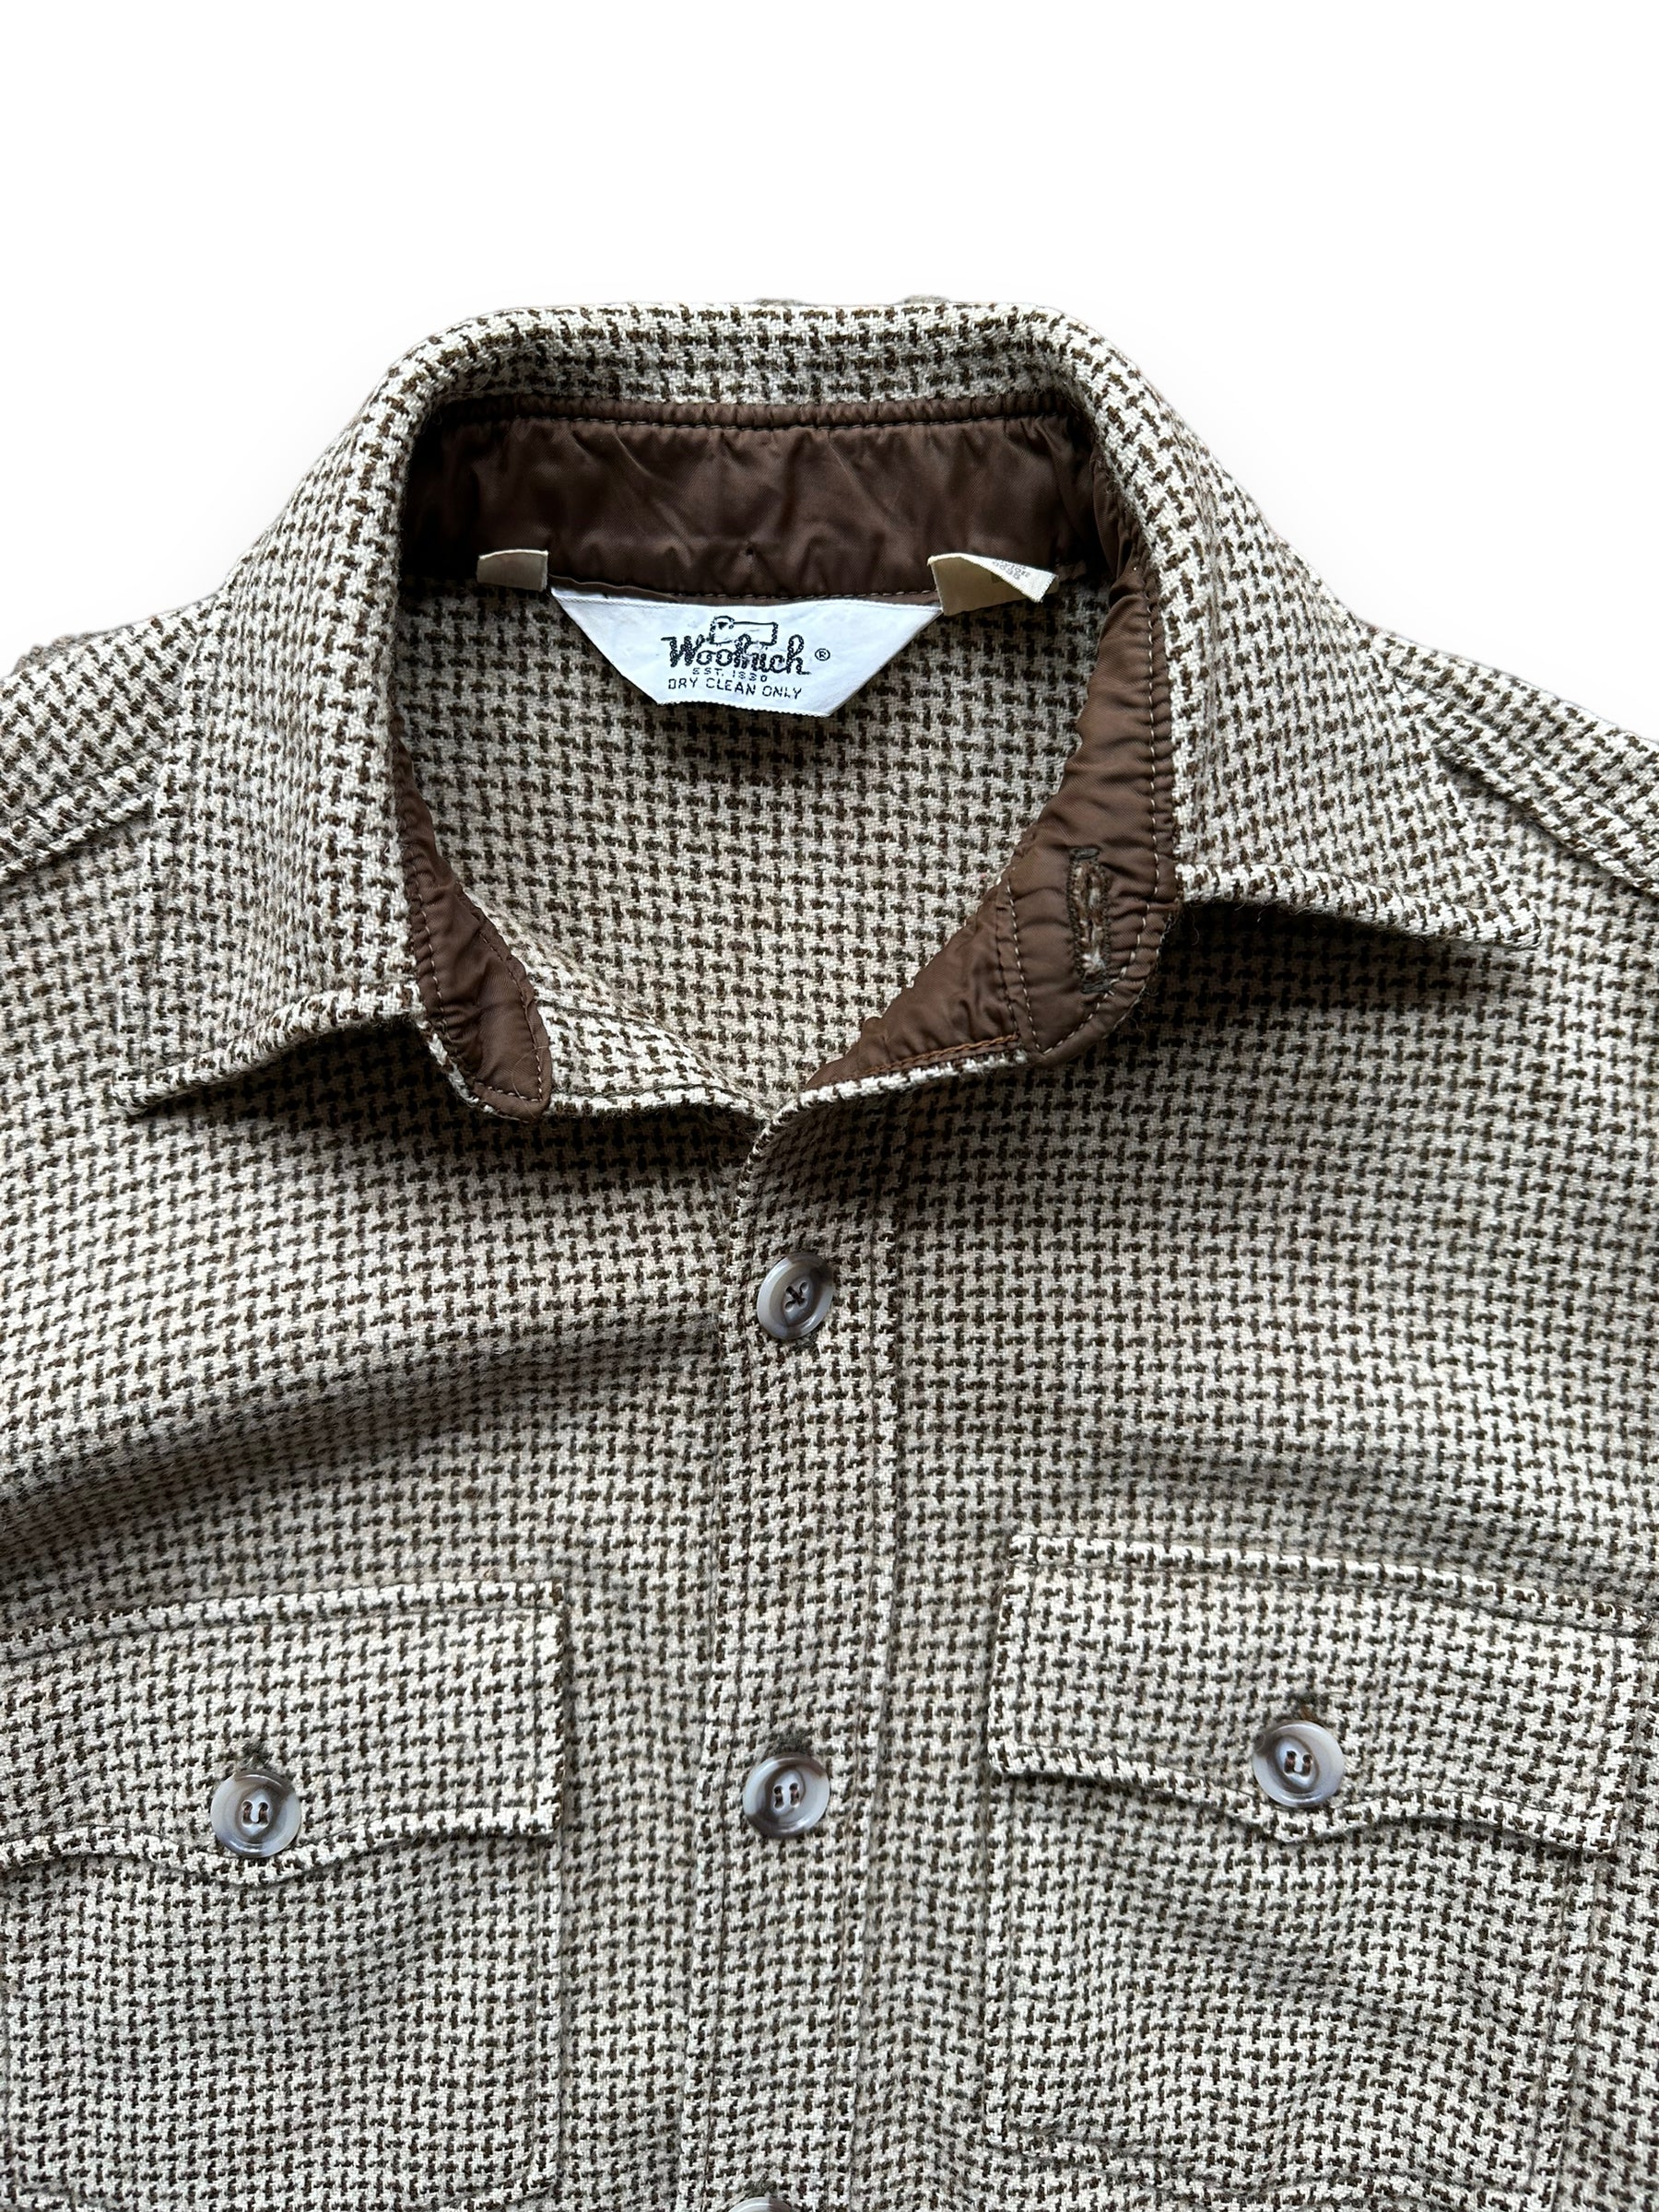 Tag View of Vintage Tan Houndstooth Woolrich Shirt Jacket SZ M |  Barn Owl Vintage Goods | Vintage Workwear Seattle